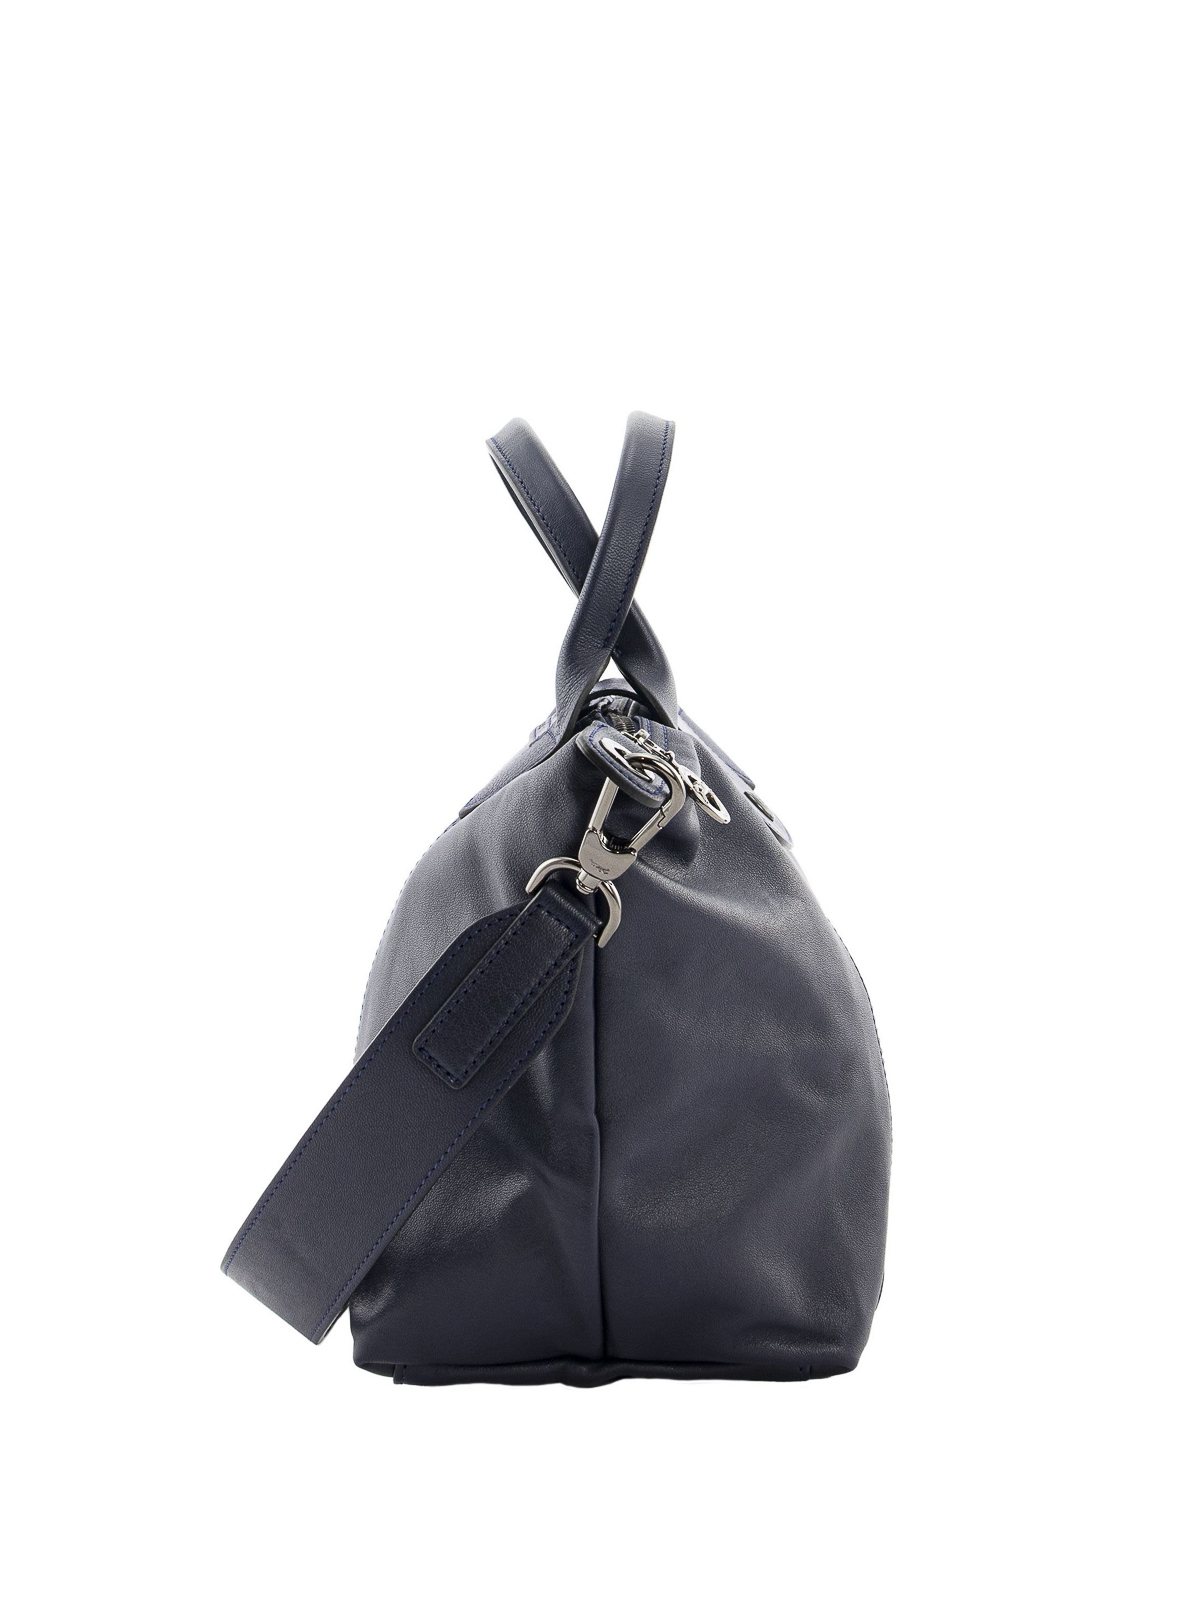 Longchamp Le Pliage Leather Shoulder Bag, Shopping Tote